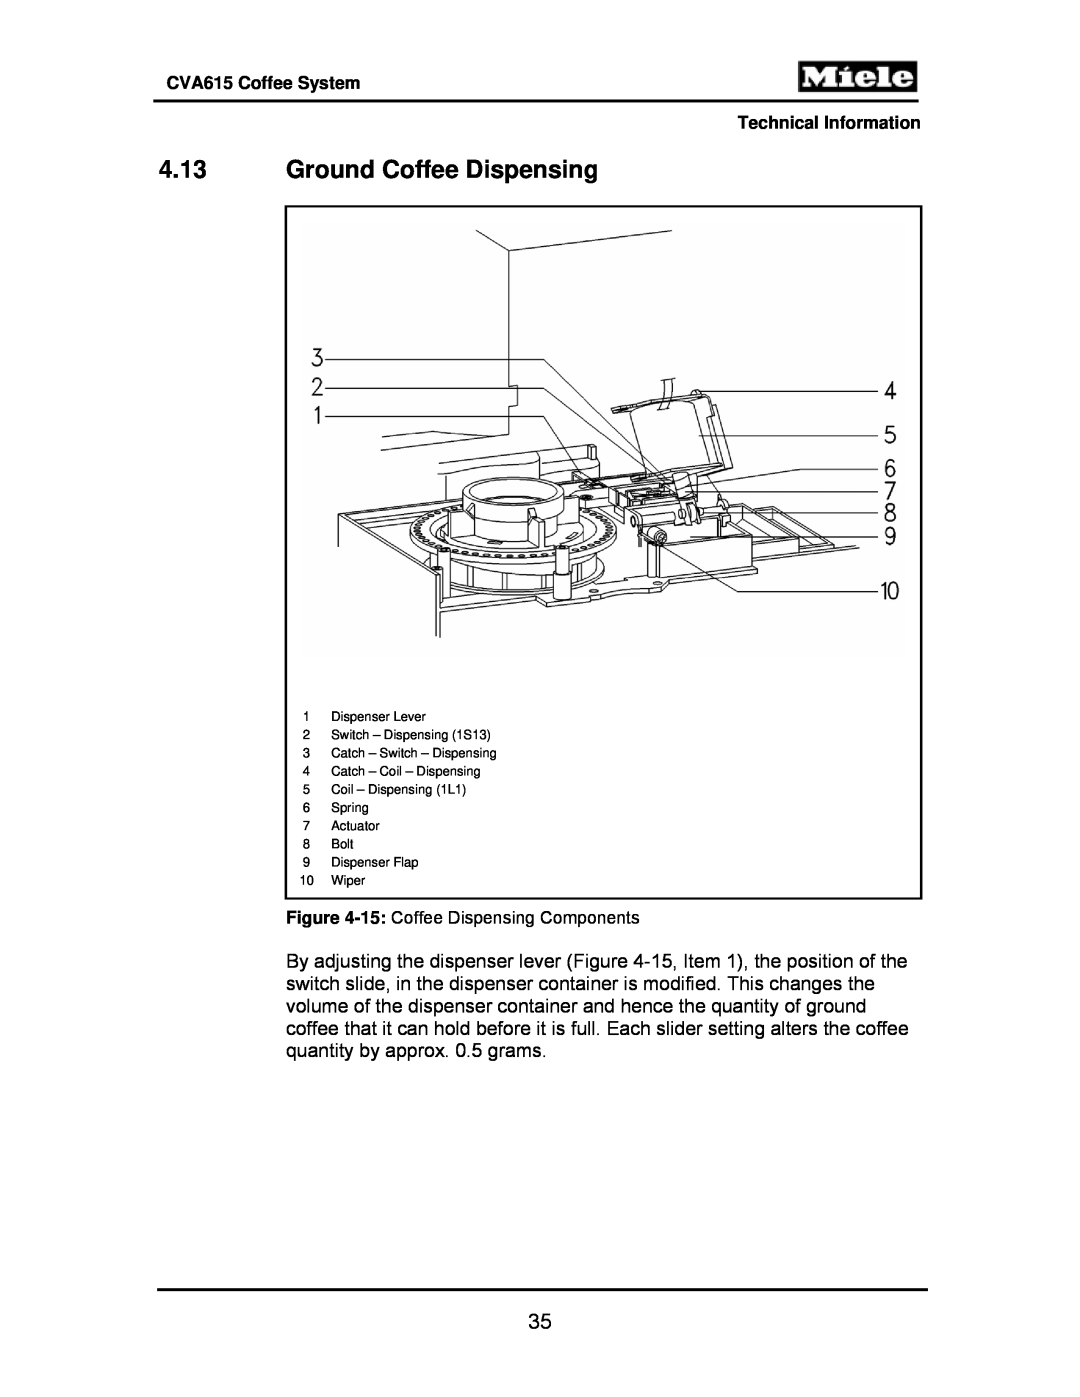 Miele CVA615 manual 4.13Ground Coffee Dispensing, 15: Coffee Dispensing Components 